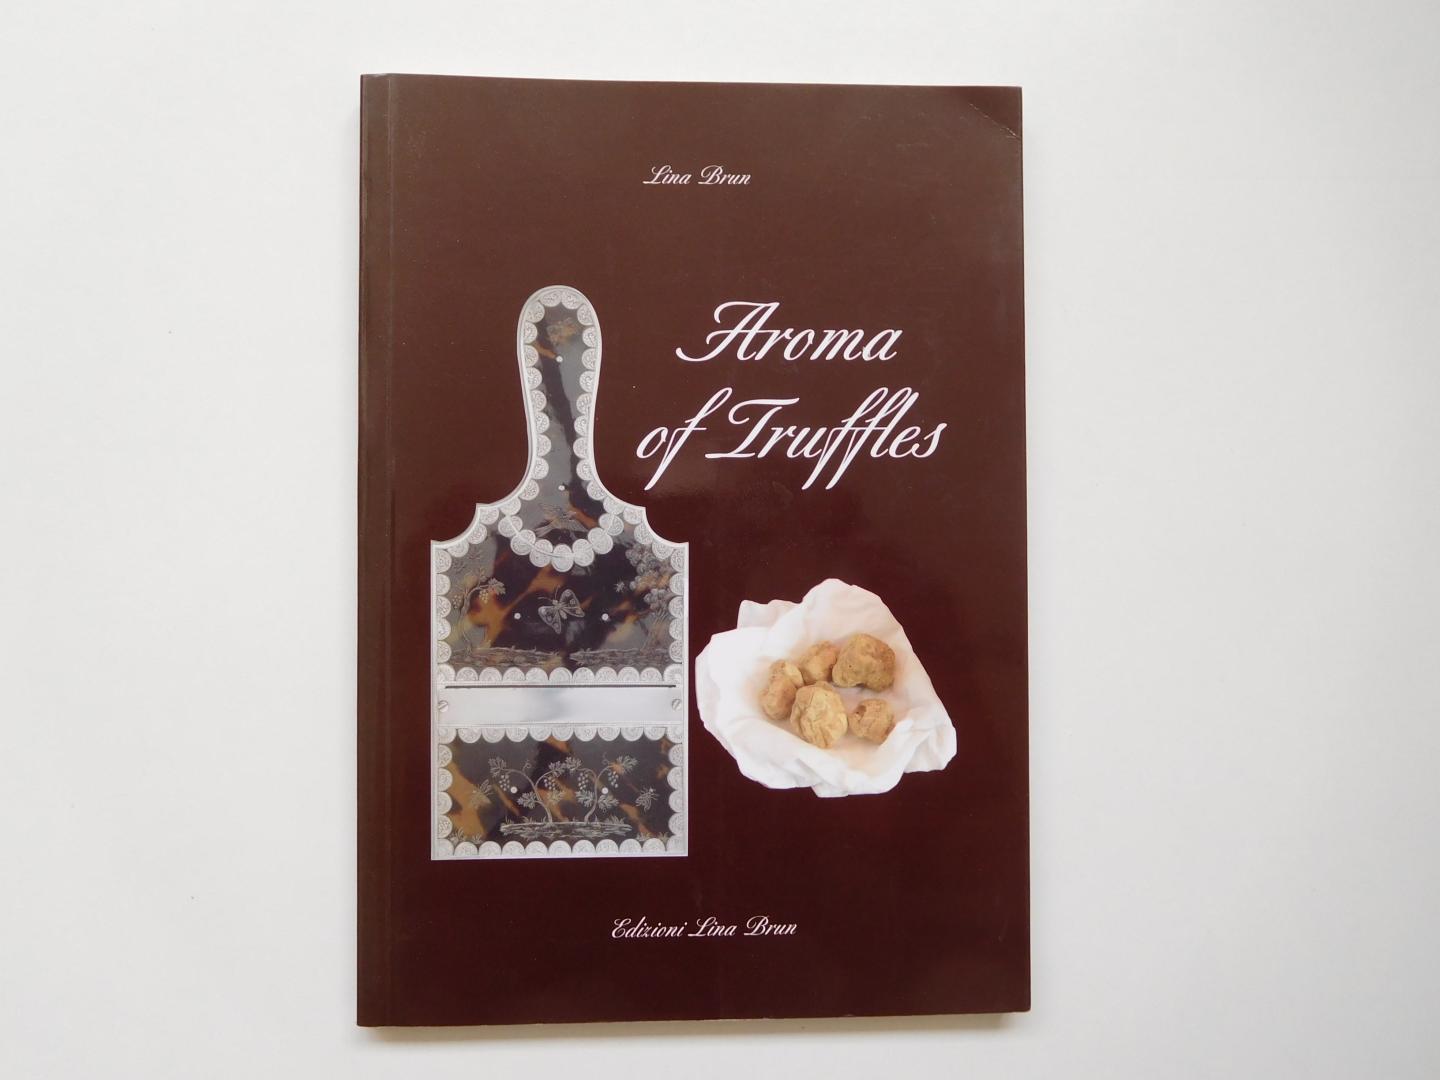 Brun, Lina - Aroma of Truffles